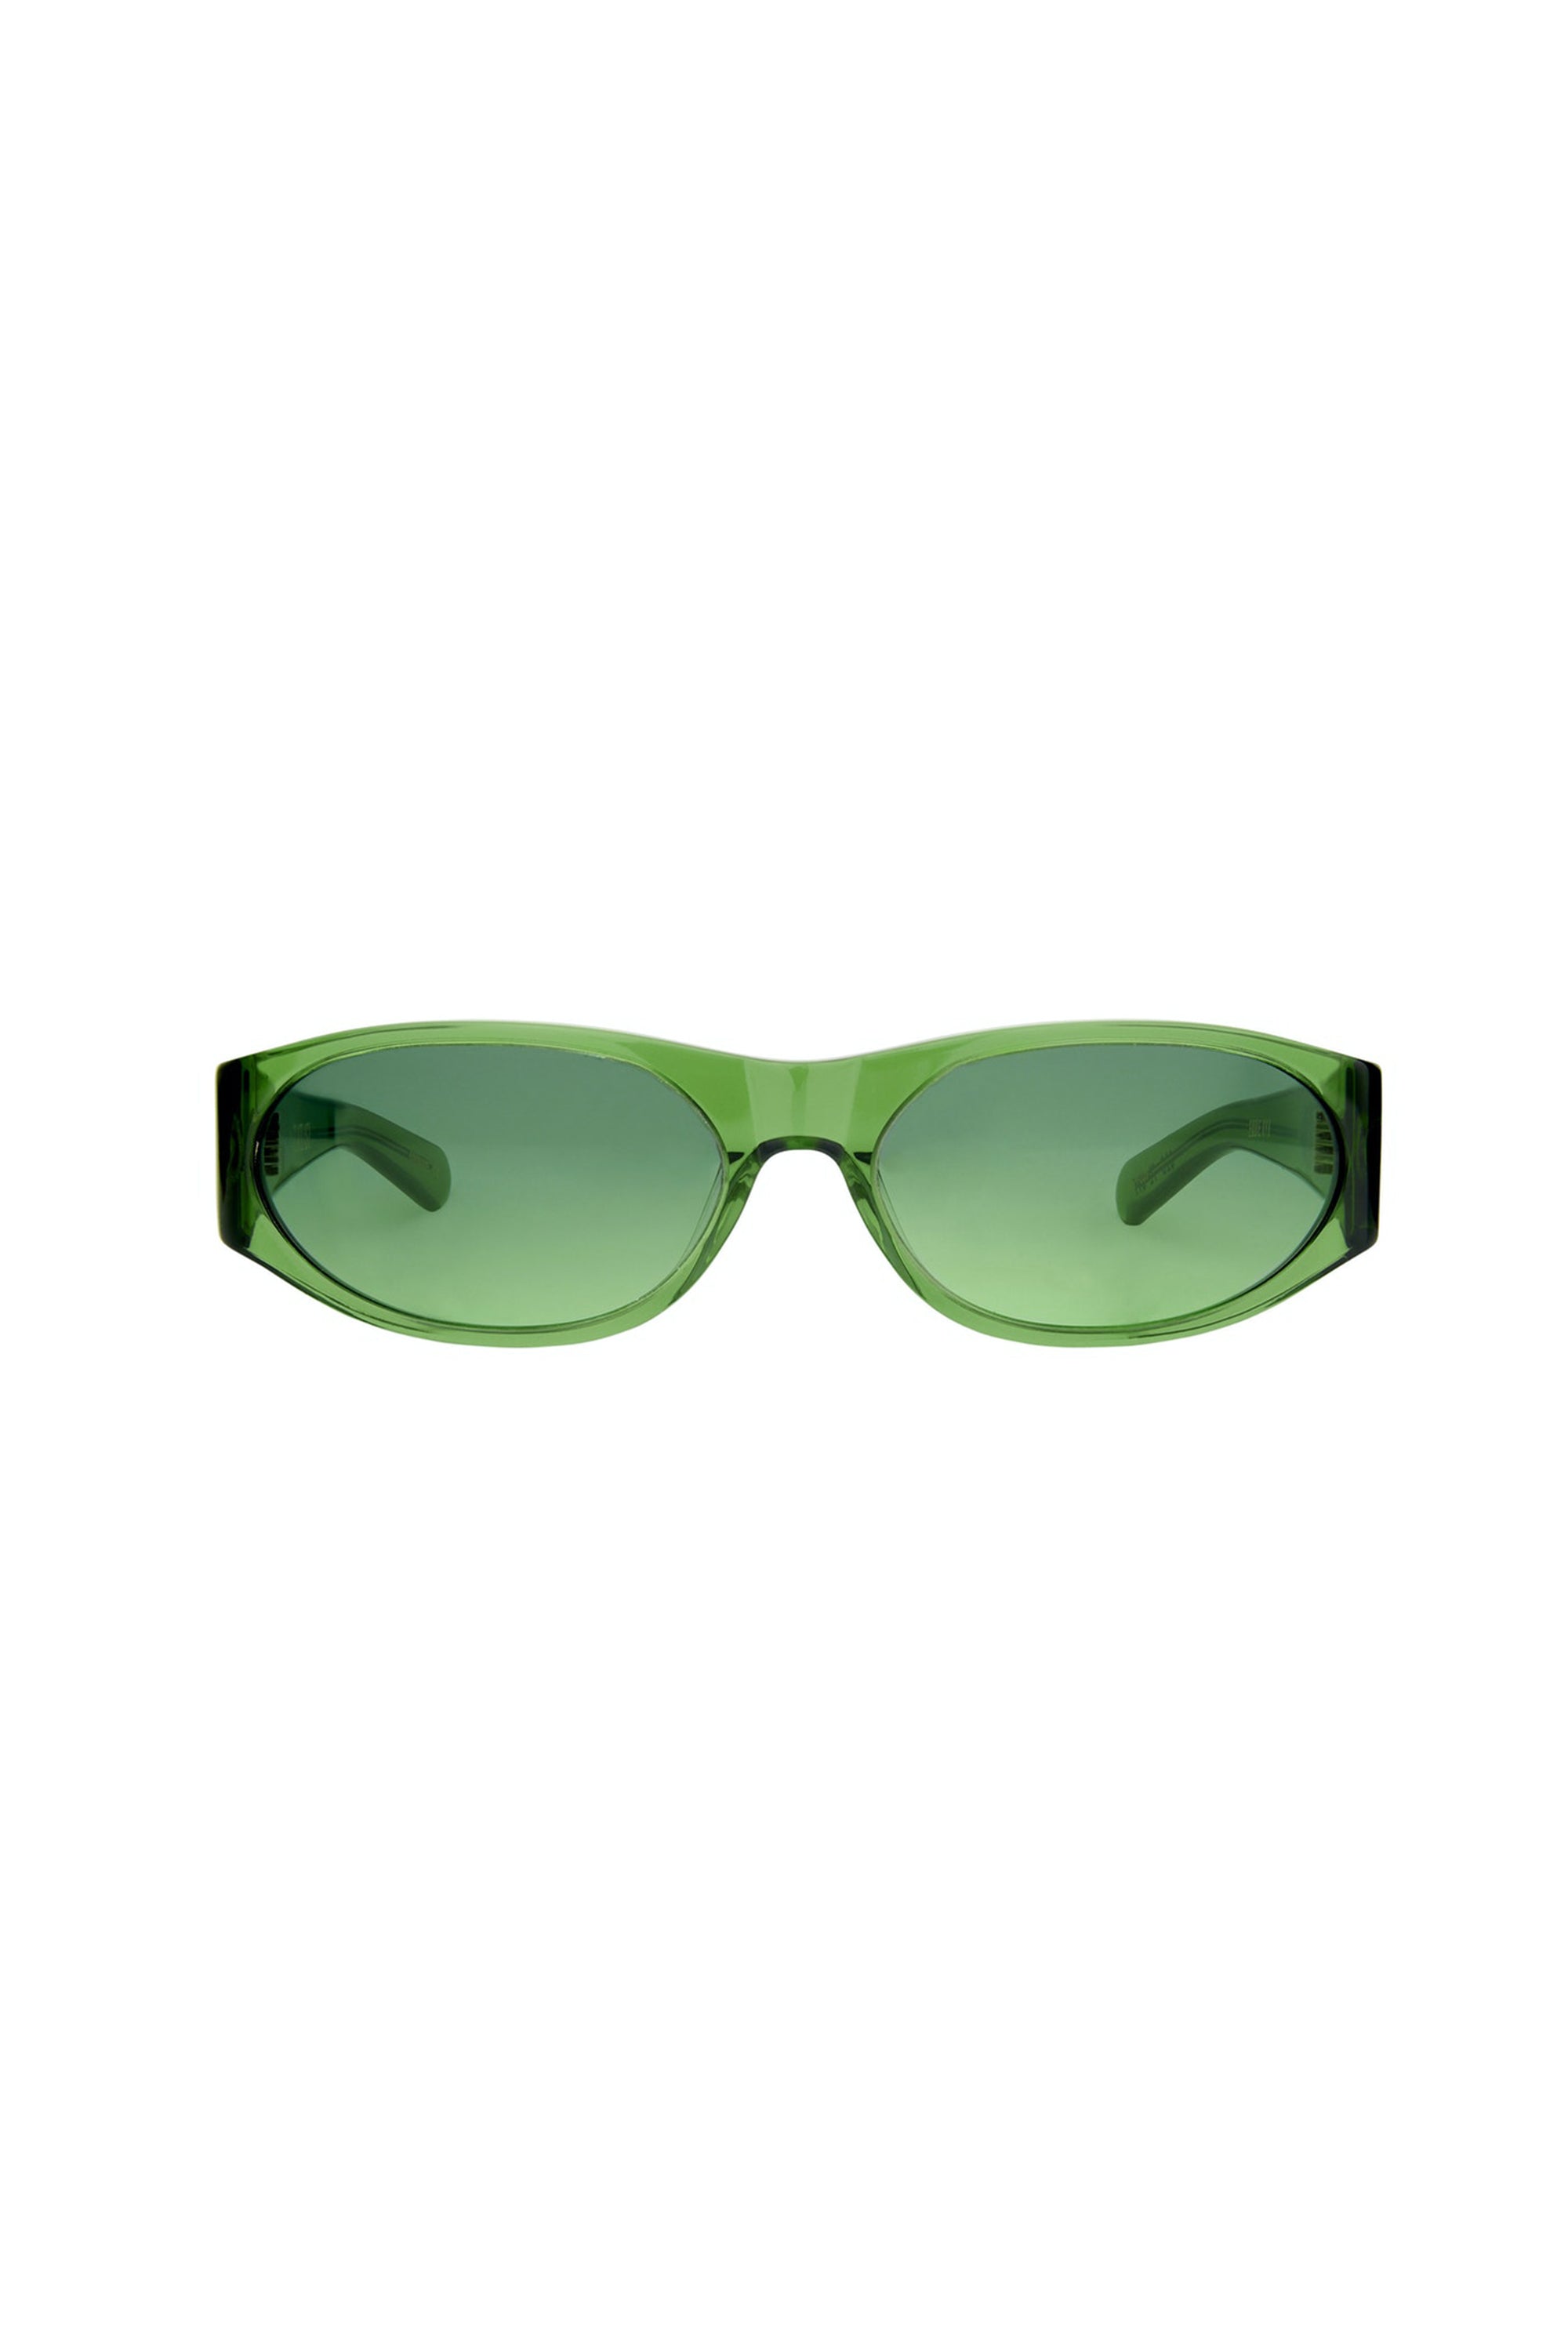 Janice matchmaker Så hurtigt som en flash Flatlist Eyewear - Eddie Kyu Solid Green/Green Gradient Lens